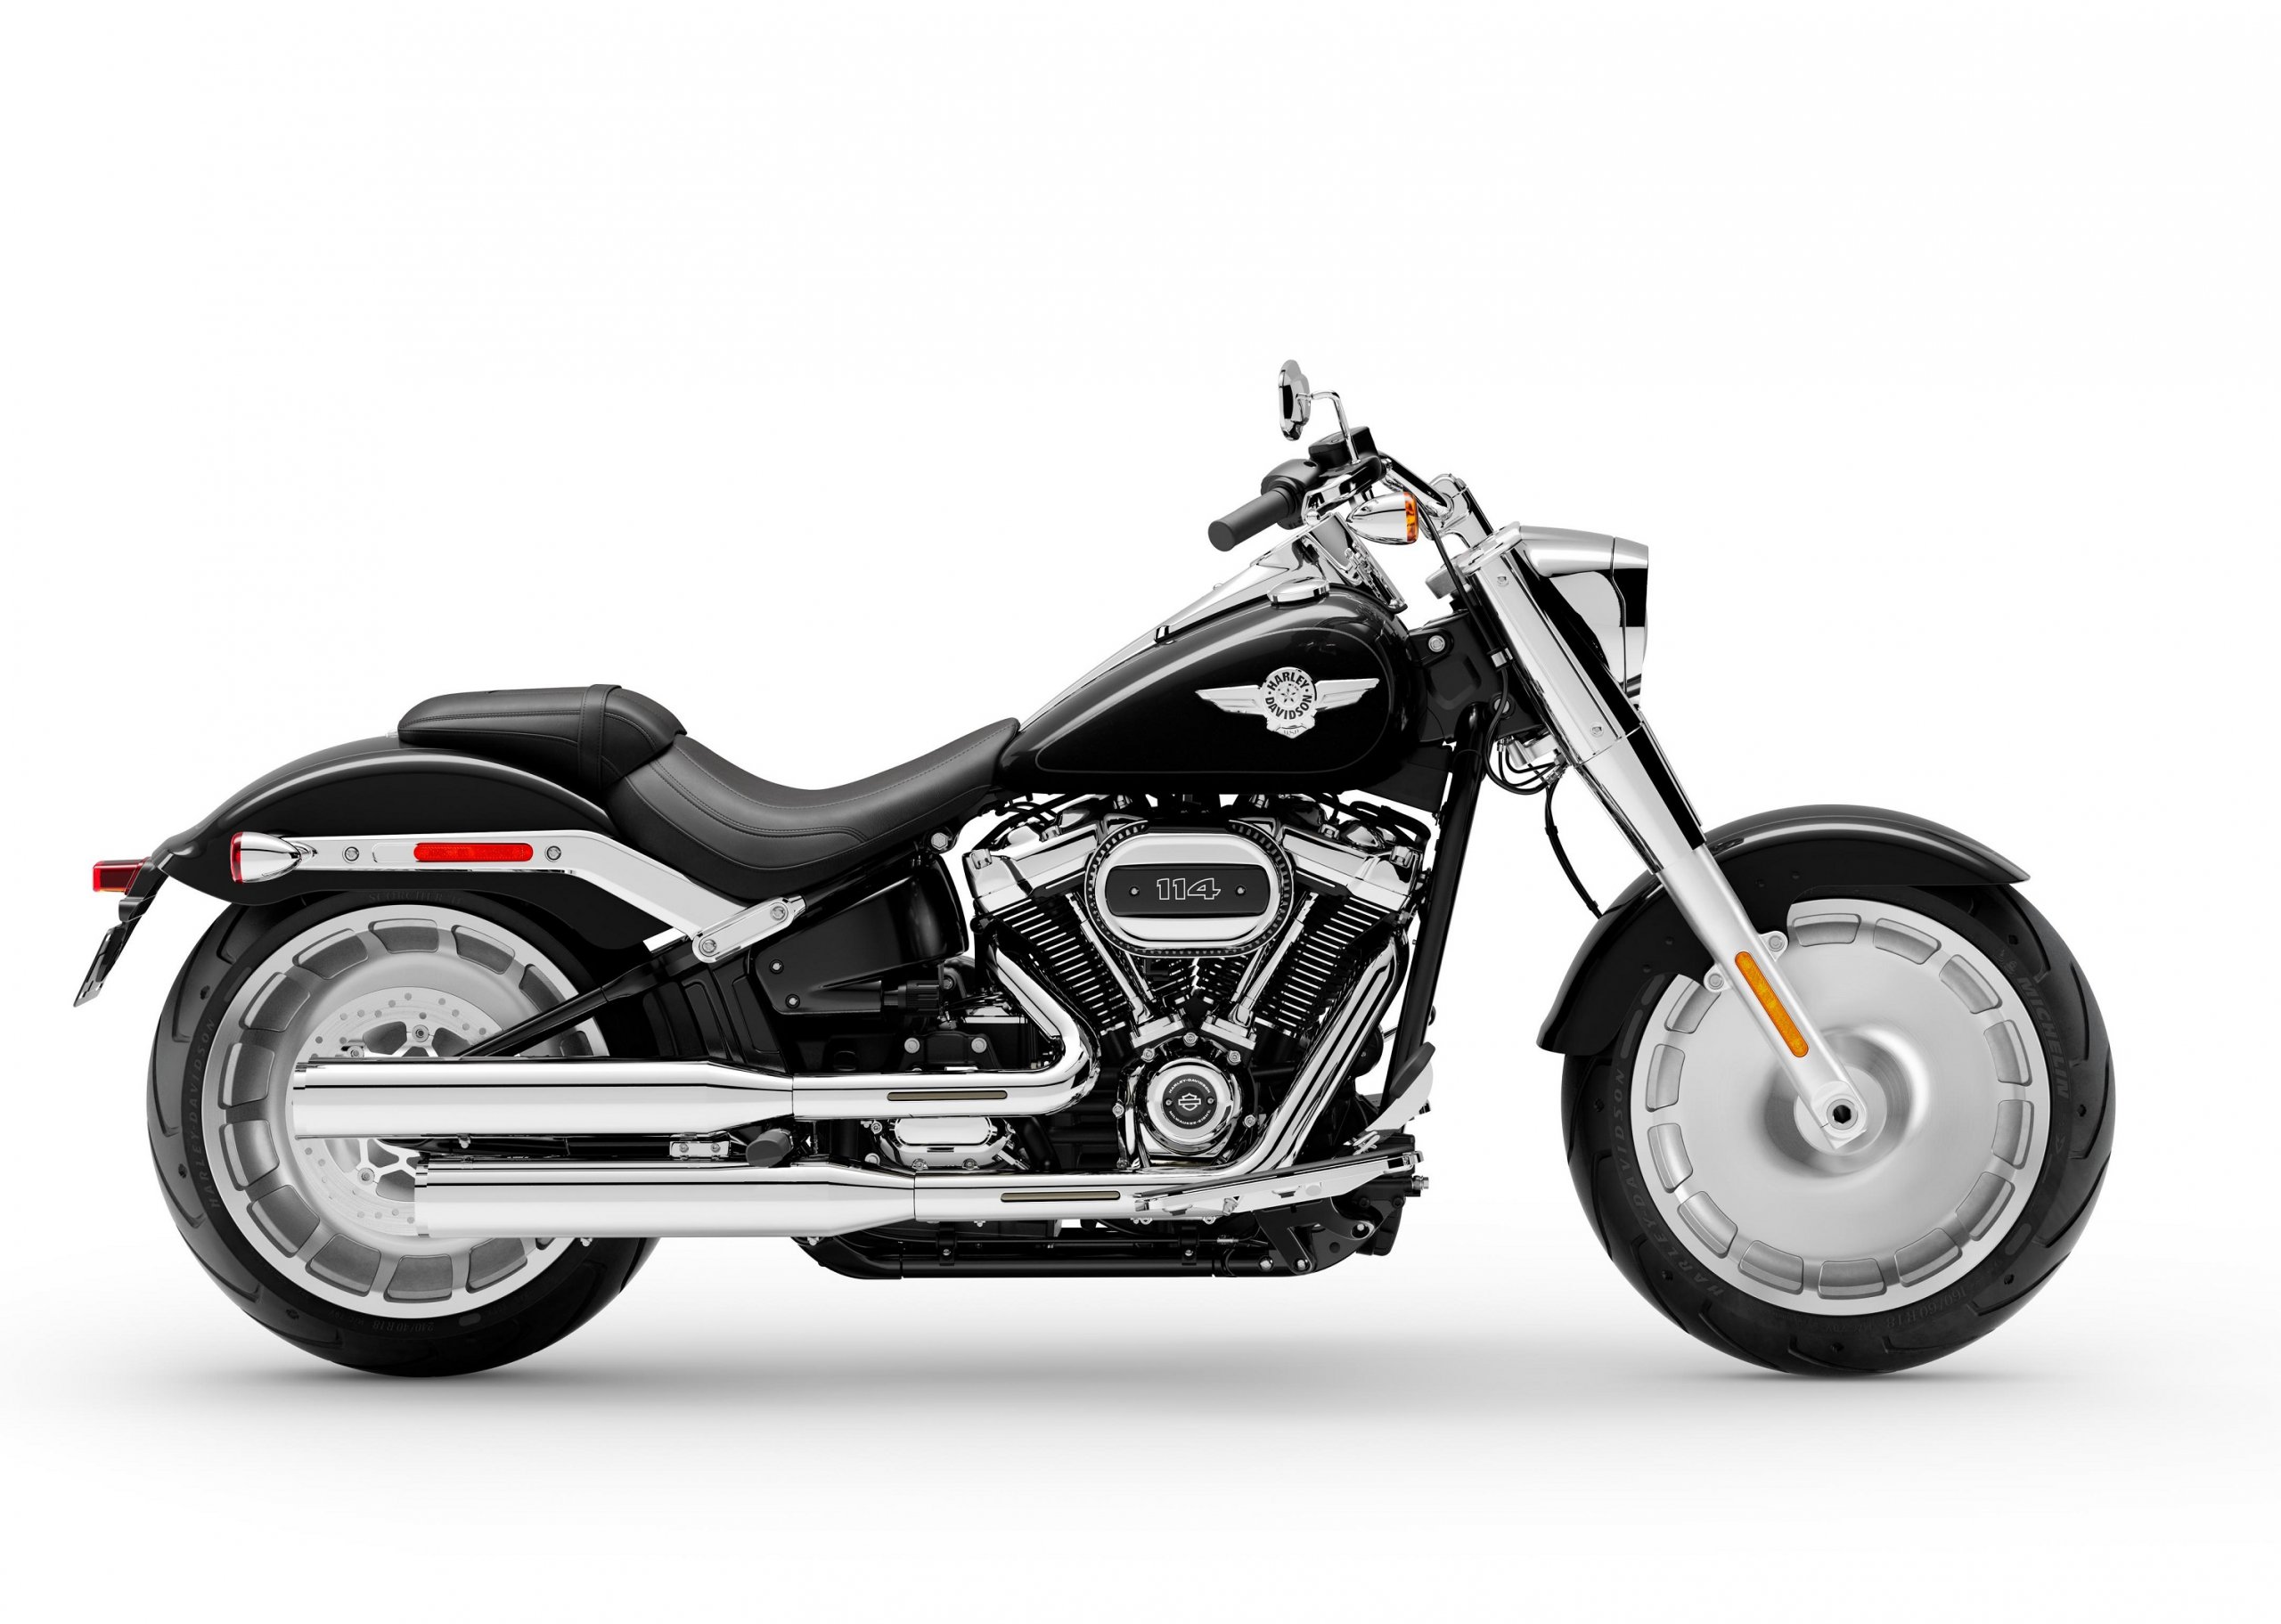 2. Harley Davidson Fat Boy 114 2021